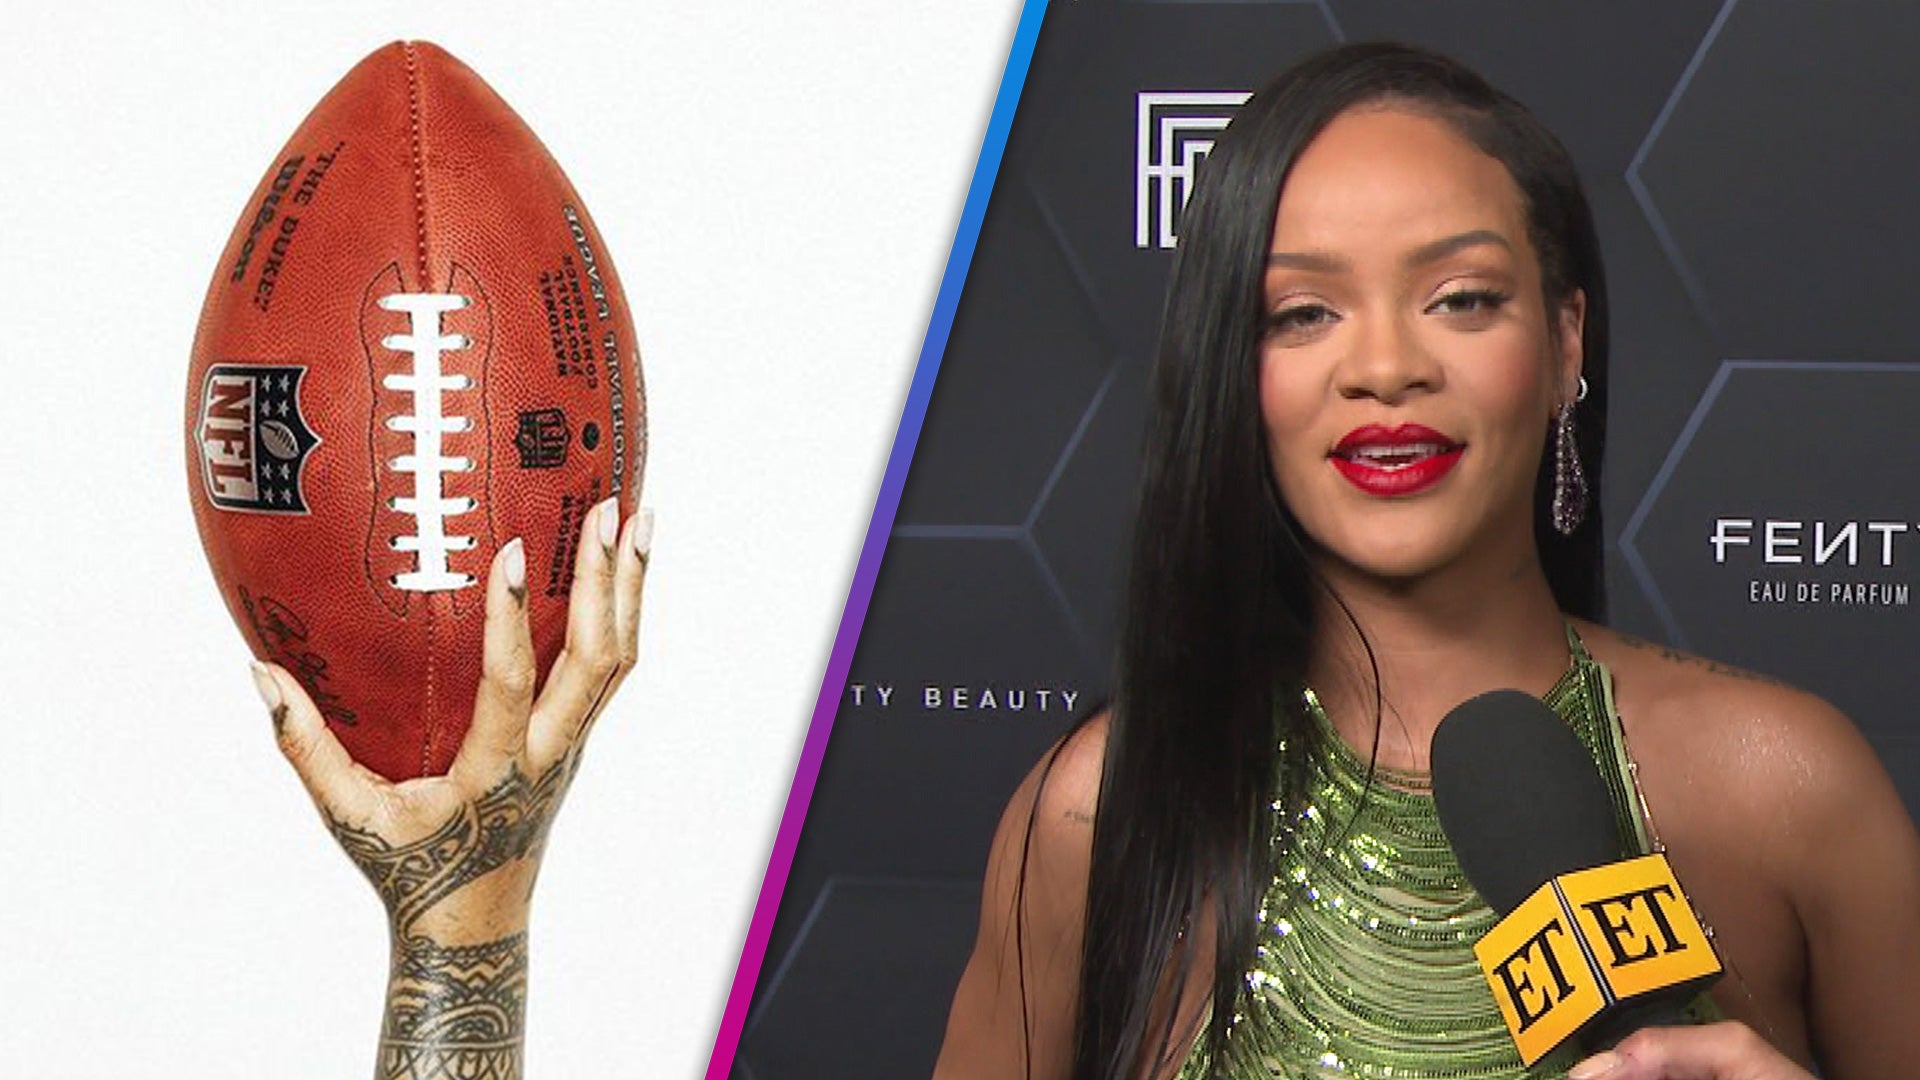 How to Watch Rihanna's 2023 Super Bowl Halftime Show